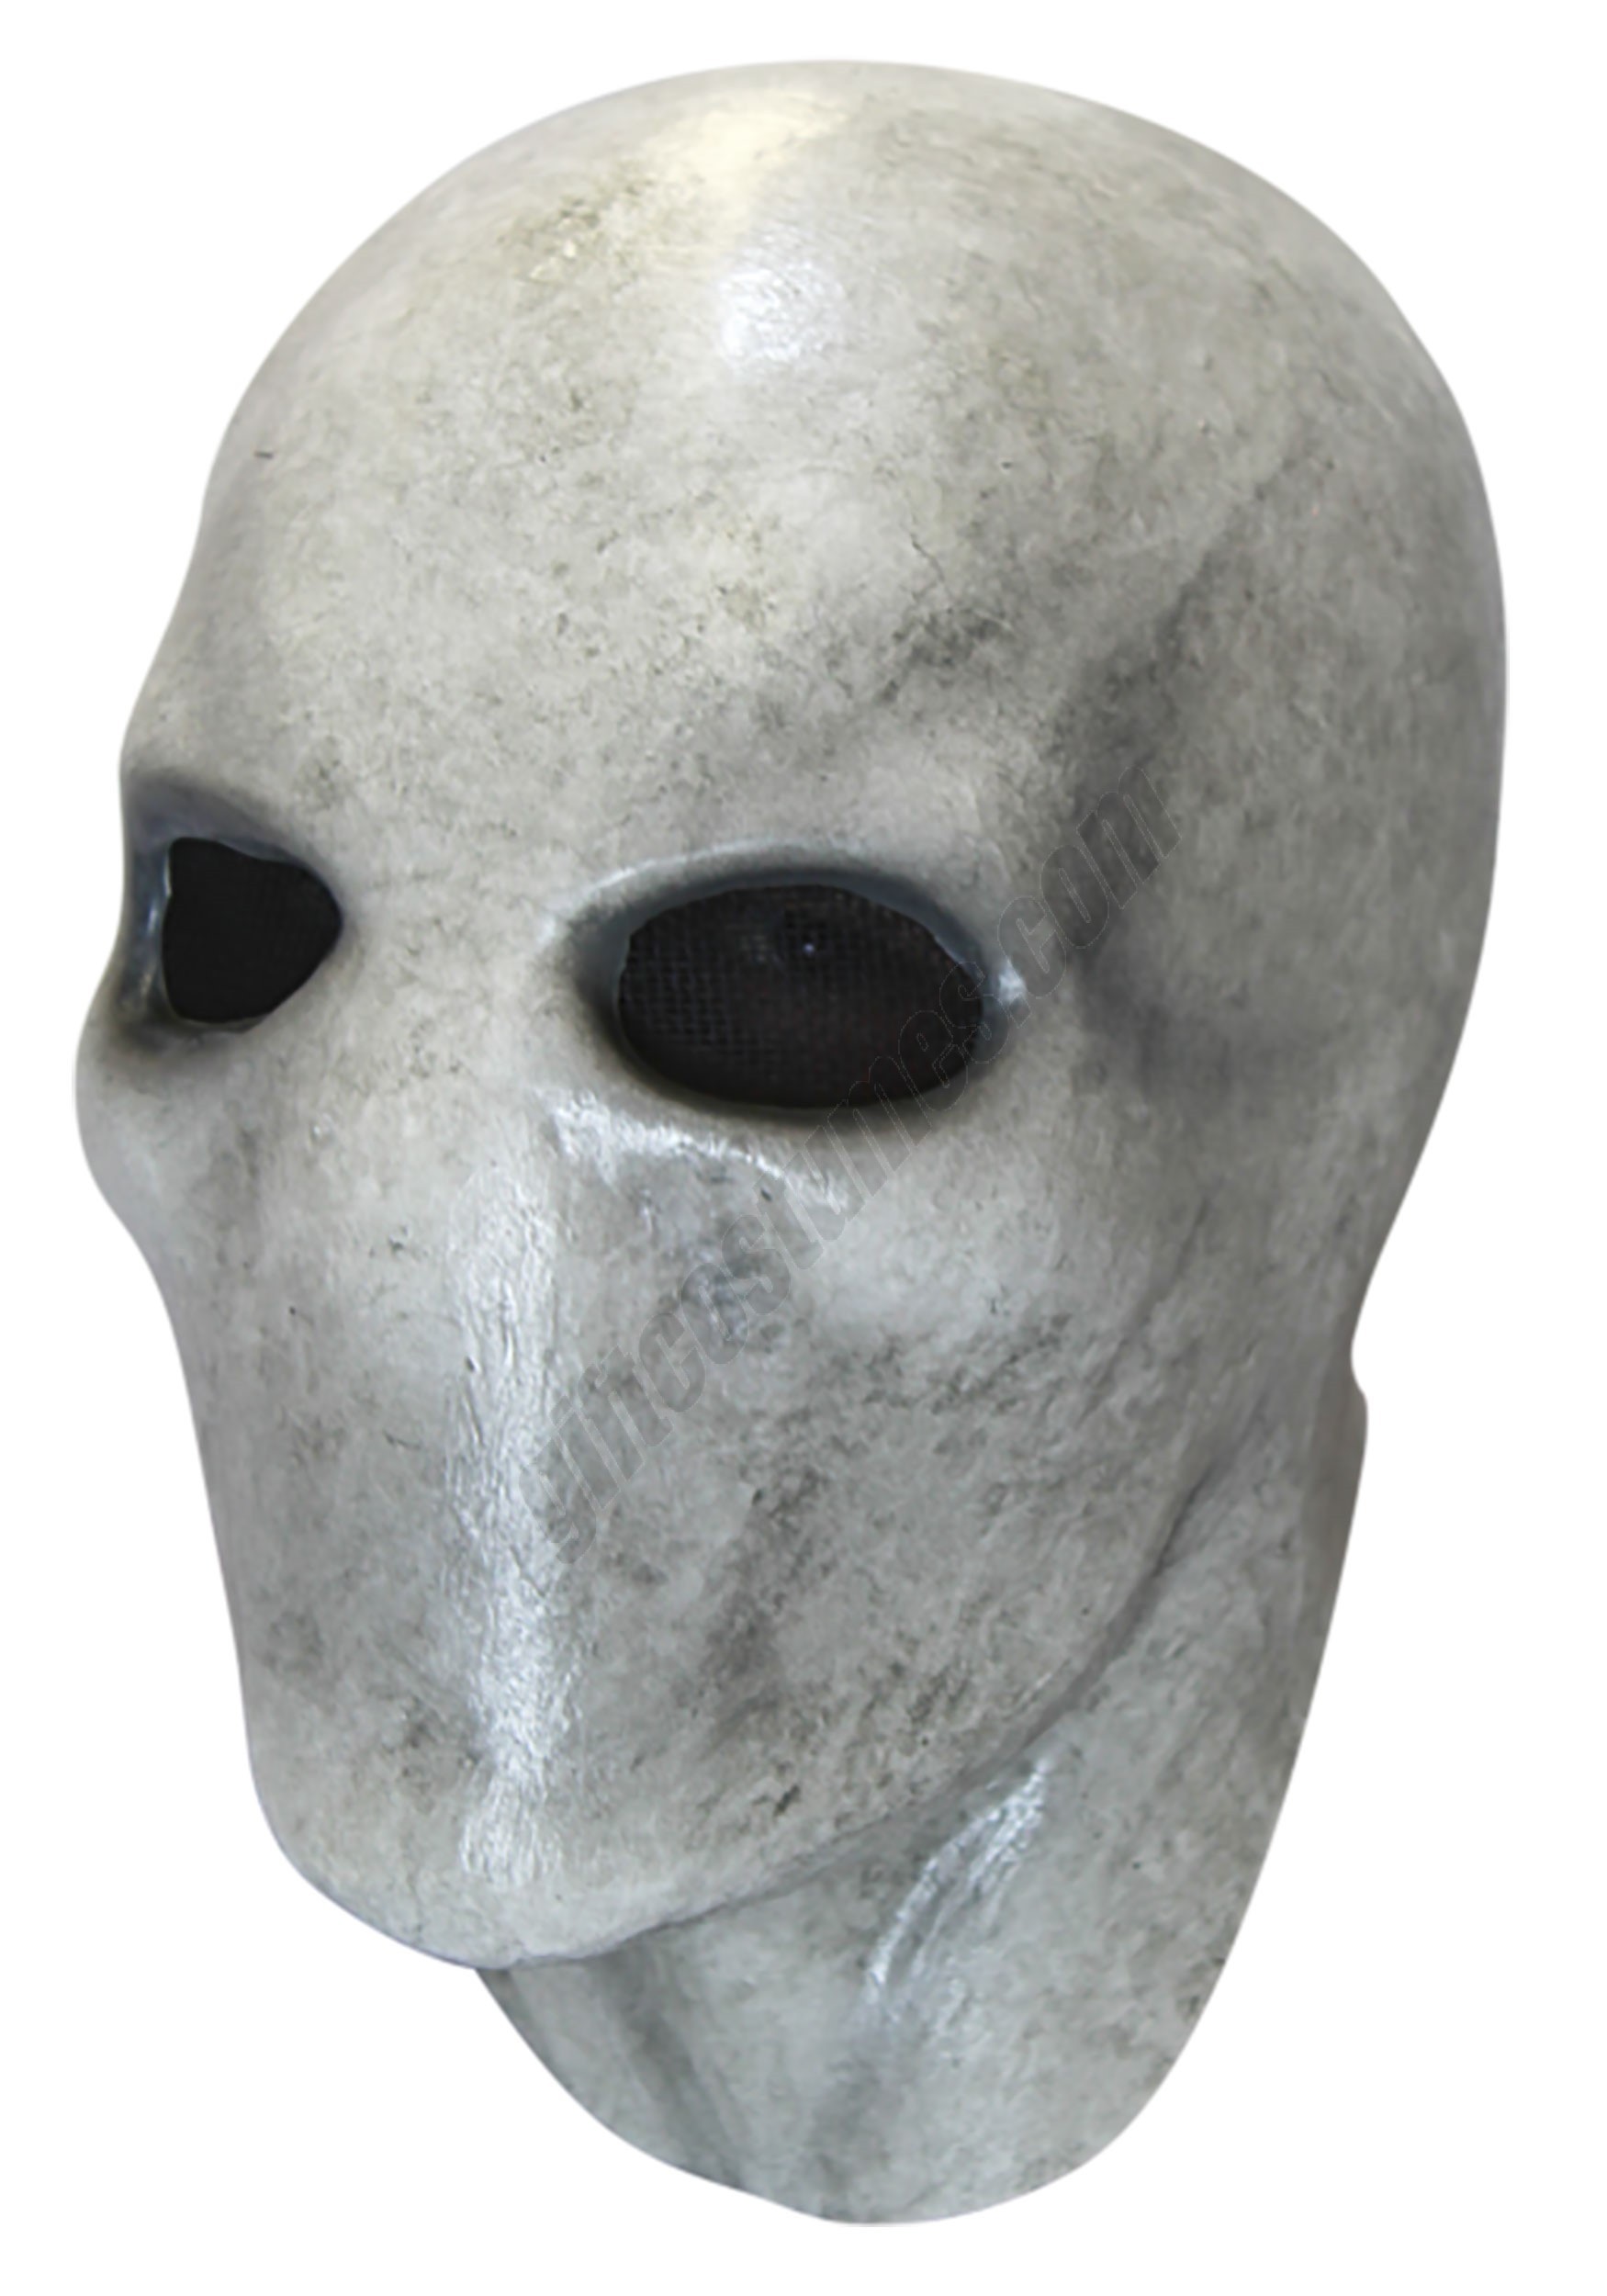 Adult Pale Slenderman Mask Promotions - Adult Pale Slenderman Mask Promotions